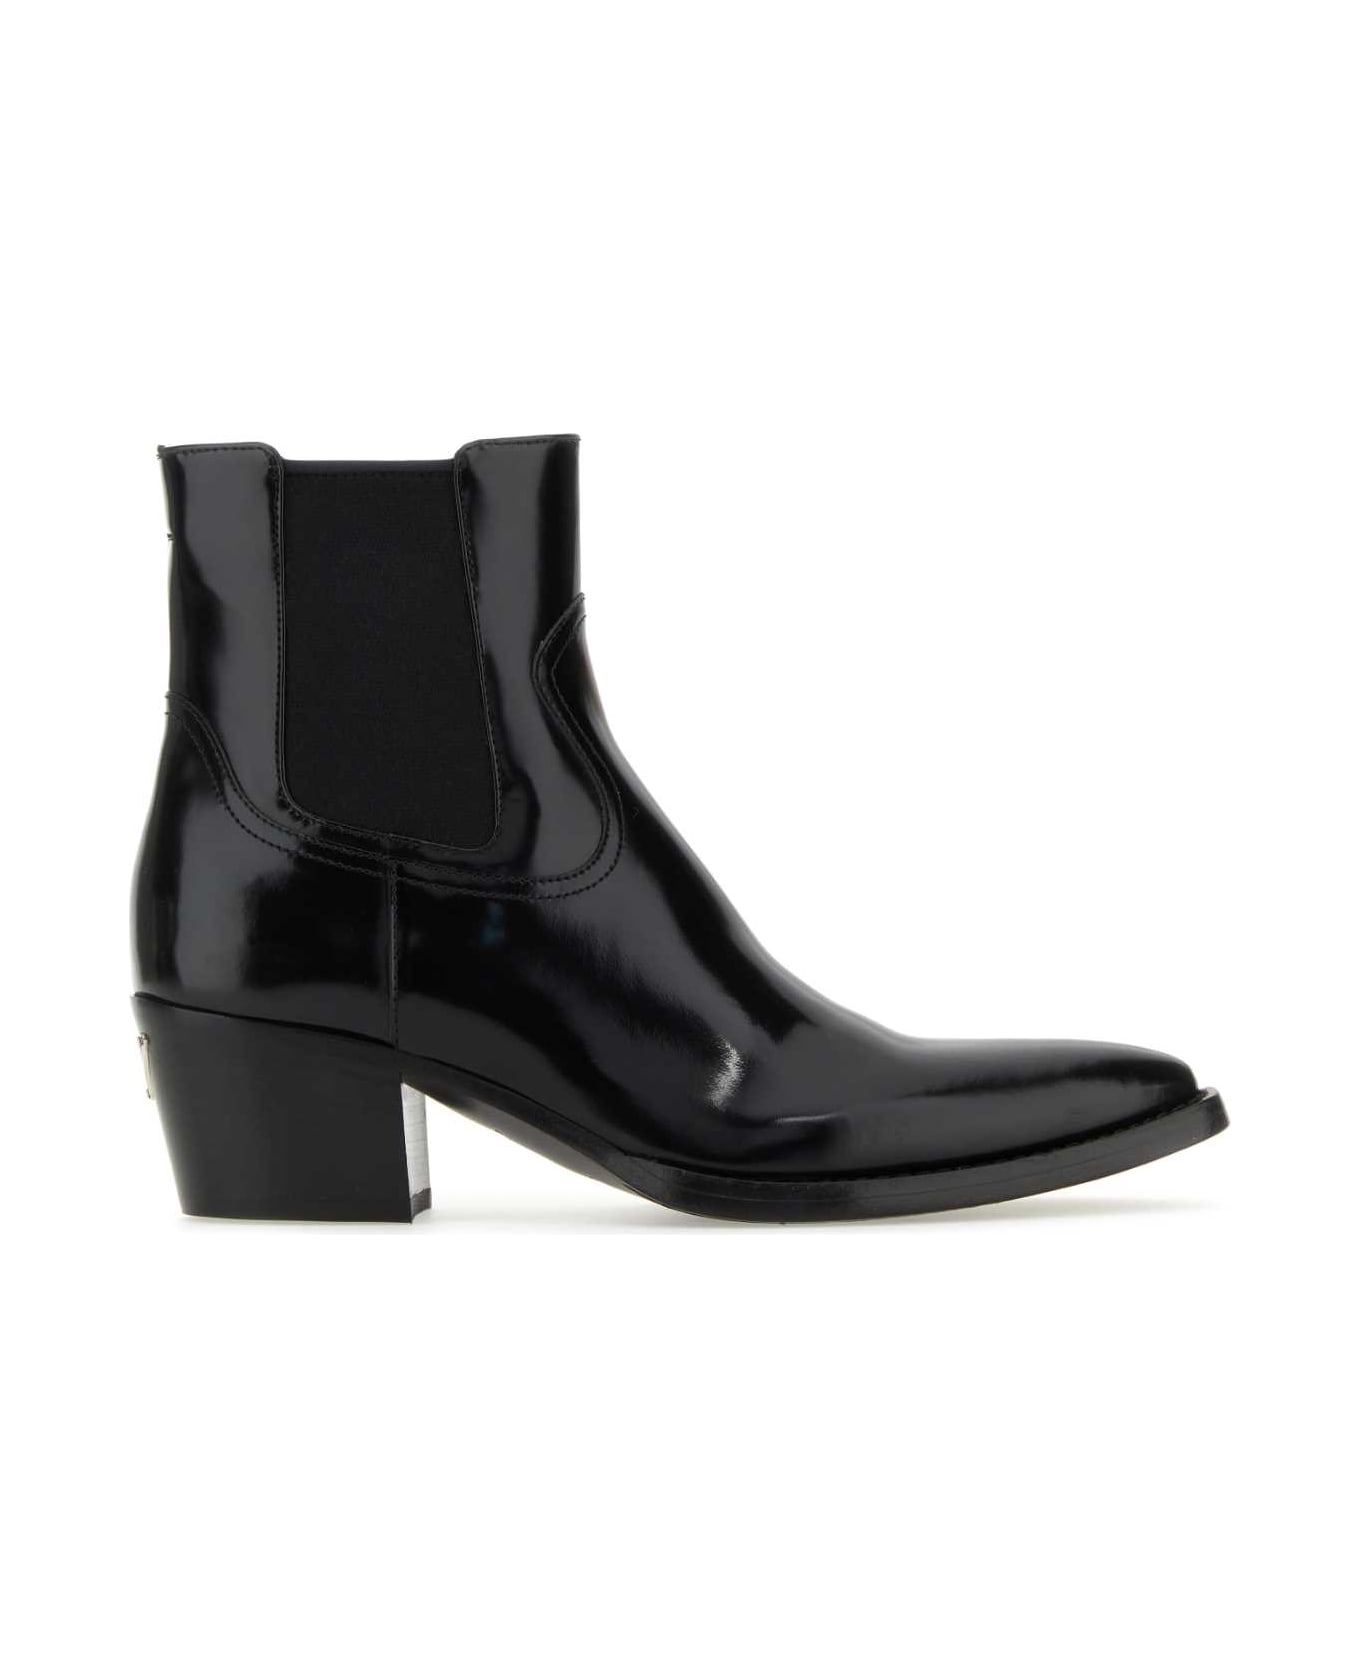 Prada Black Leather Ankle Boots - Black